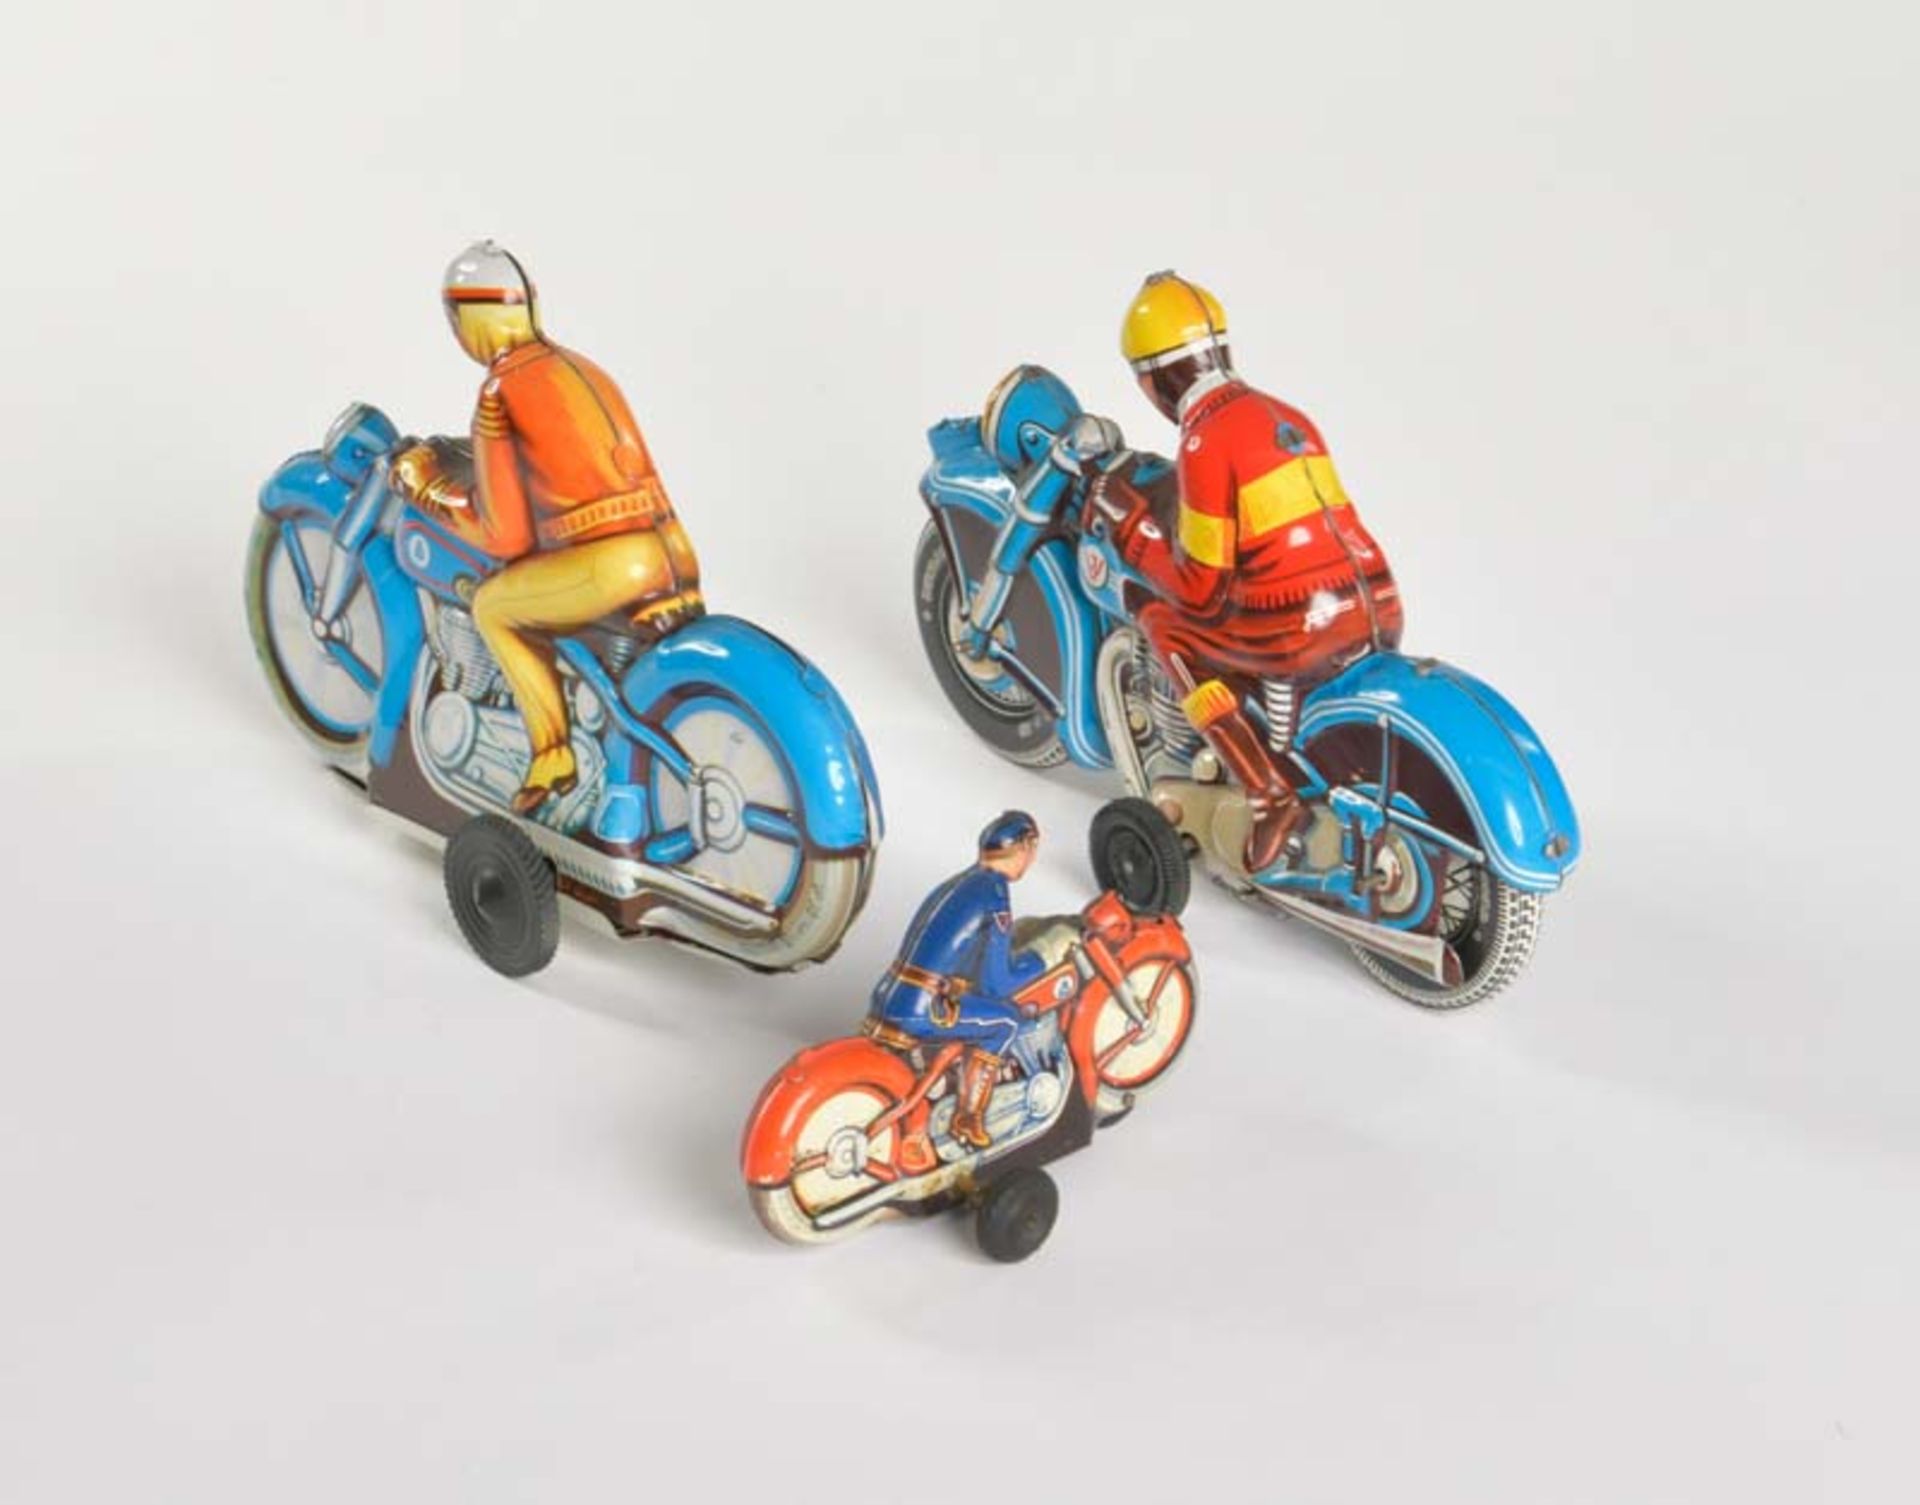 Niedermeier, 3 Motorräder, W.-Germany, 10-17 cm, Blech, Friktion ok, min. LM, Z 1-2 - Bild 2 aus 2